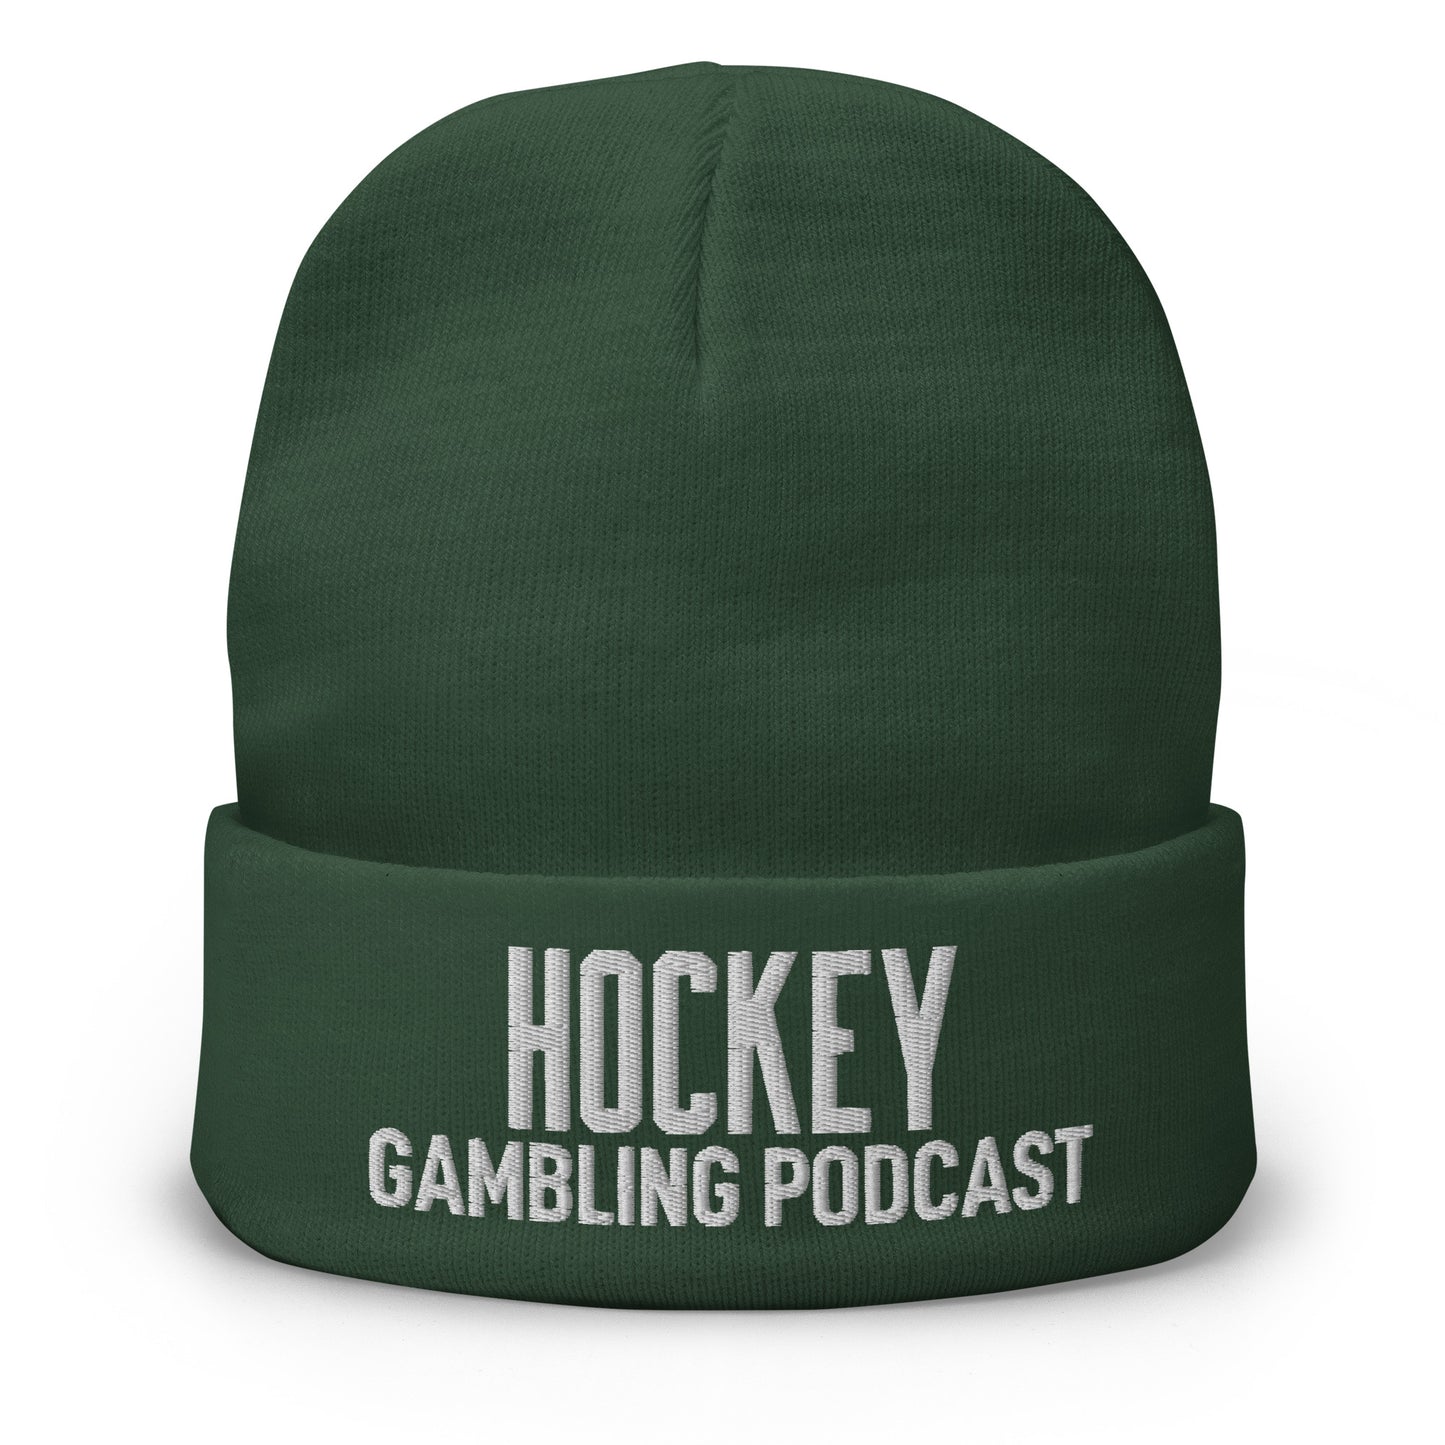 Hockey Gambling Podcast - Embroidered Beanie (White Logo)